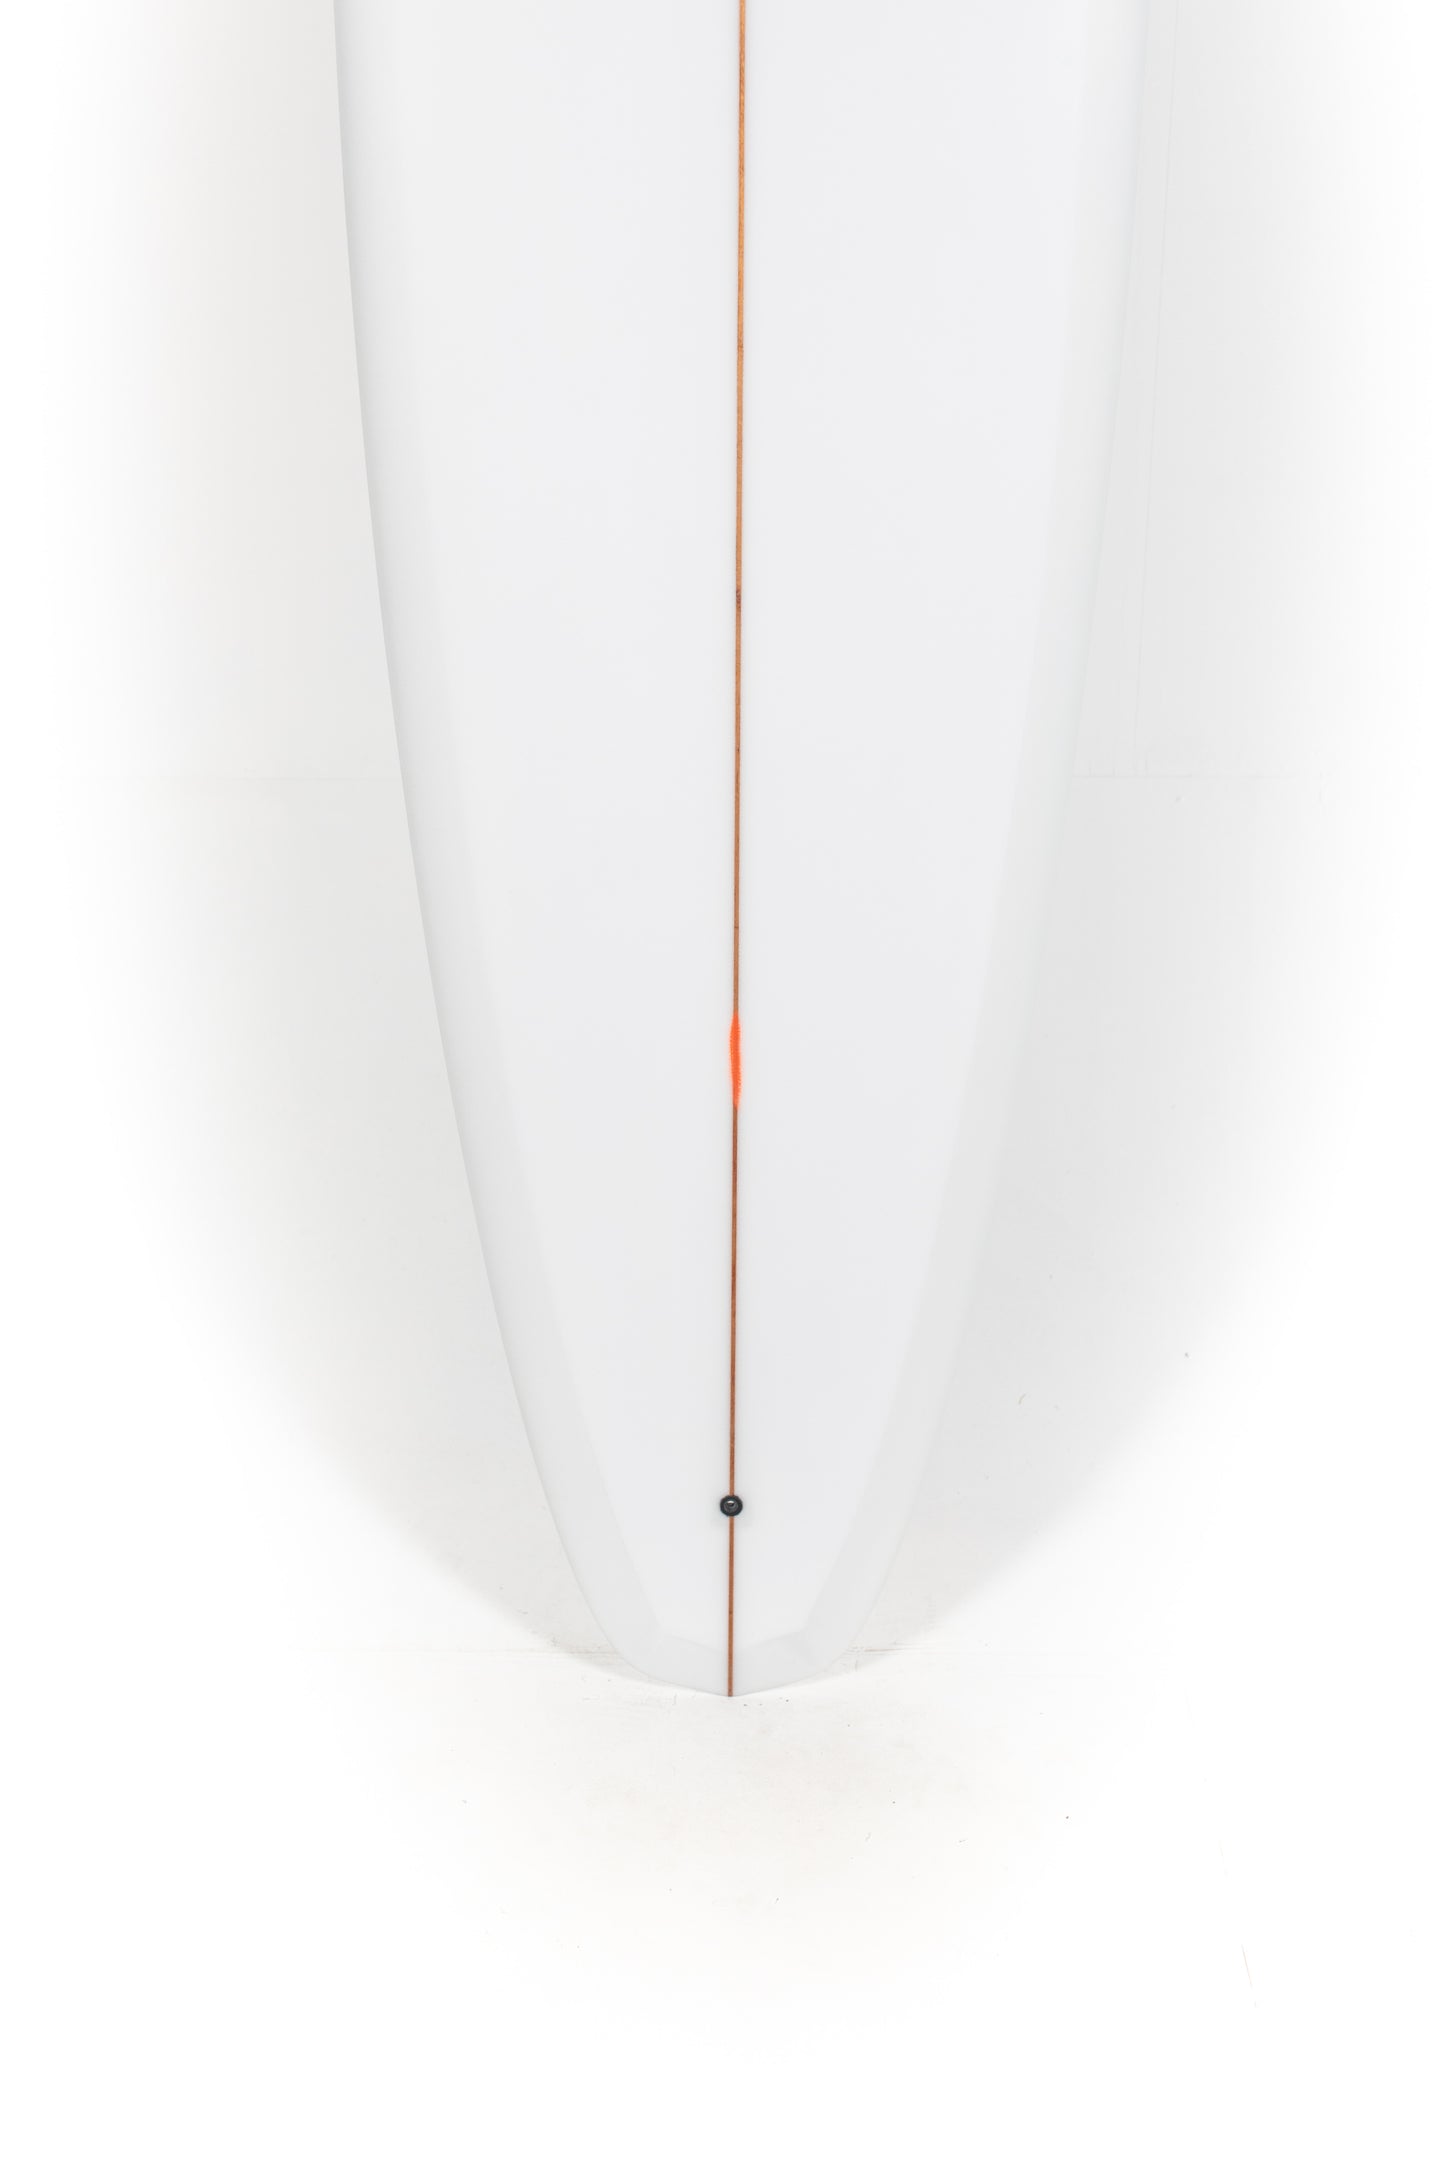 
                  
                    Pukas Surf shop - Christenson Surfboards - ULTRA TRACKER - 7'4" x 21 3/8 x 2 7/8 - CX04136
                  
                